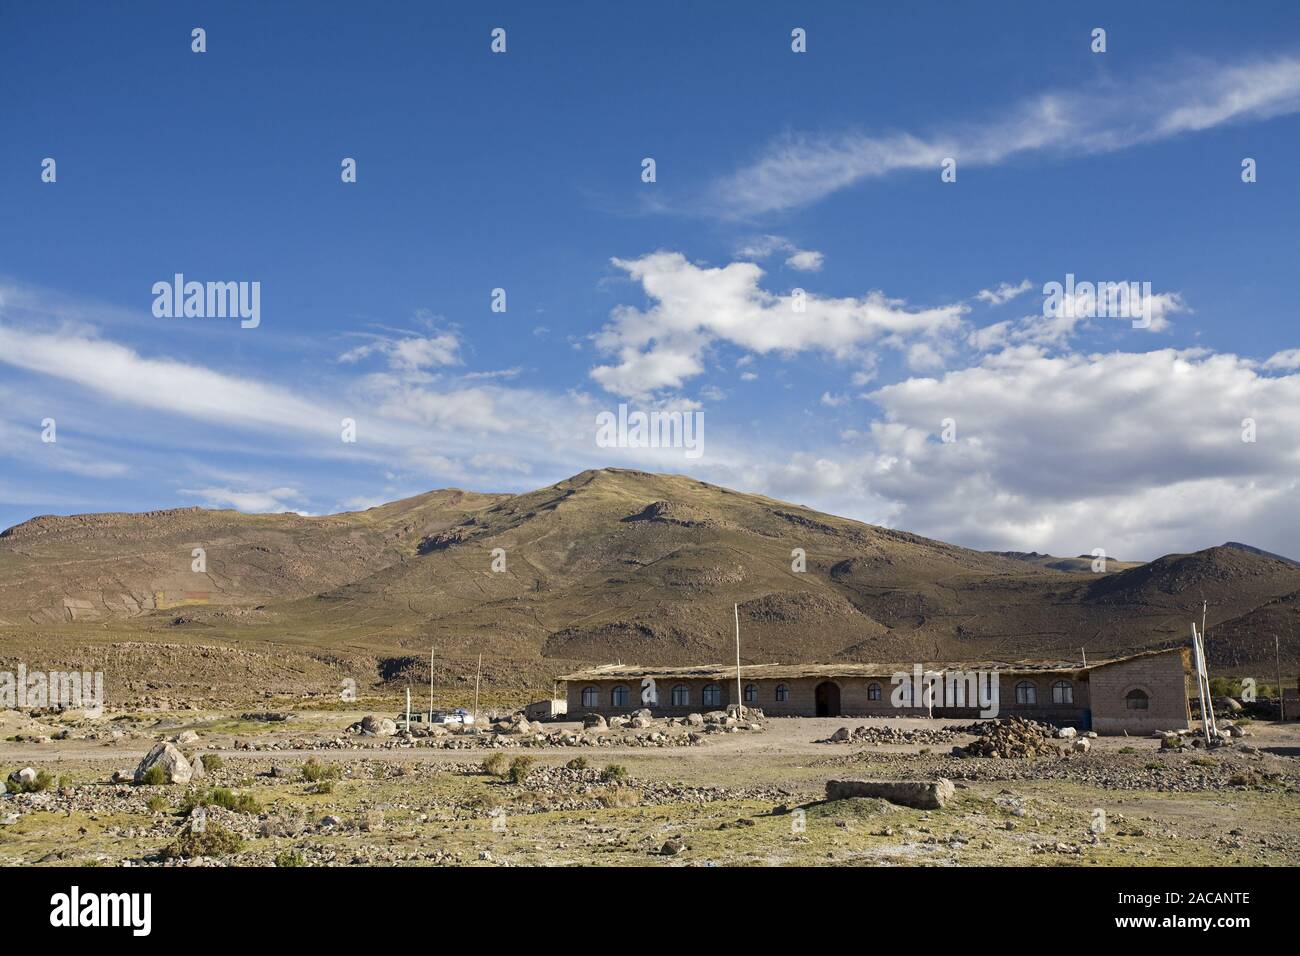 Salzhotel Marith en Atulcha, Bolivien, Altiplano, Suedamerika, Salt hotel Marith en Atulcha, Altiplano, Bolivia, South America Stock Photo